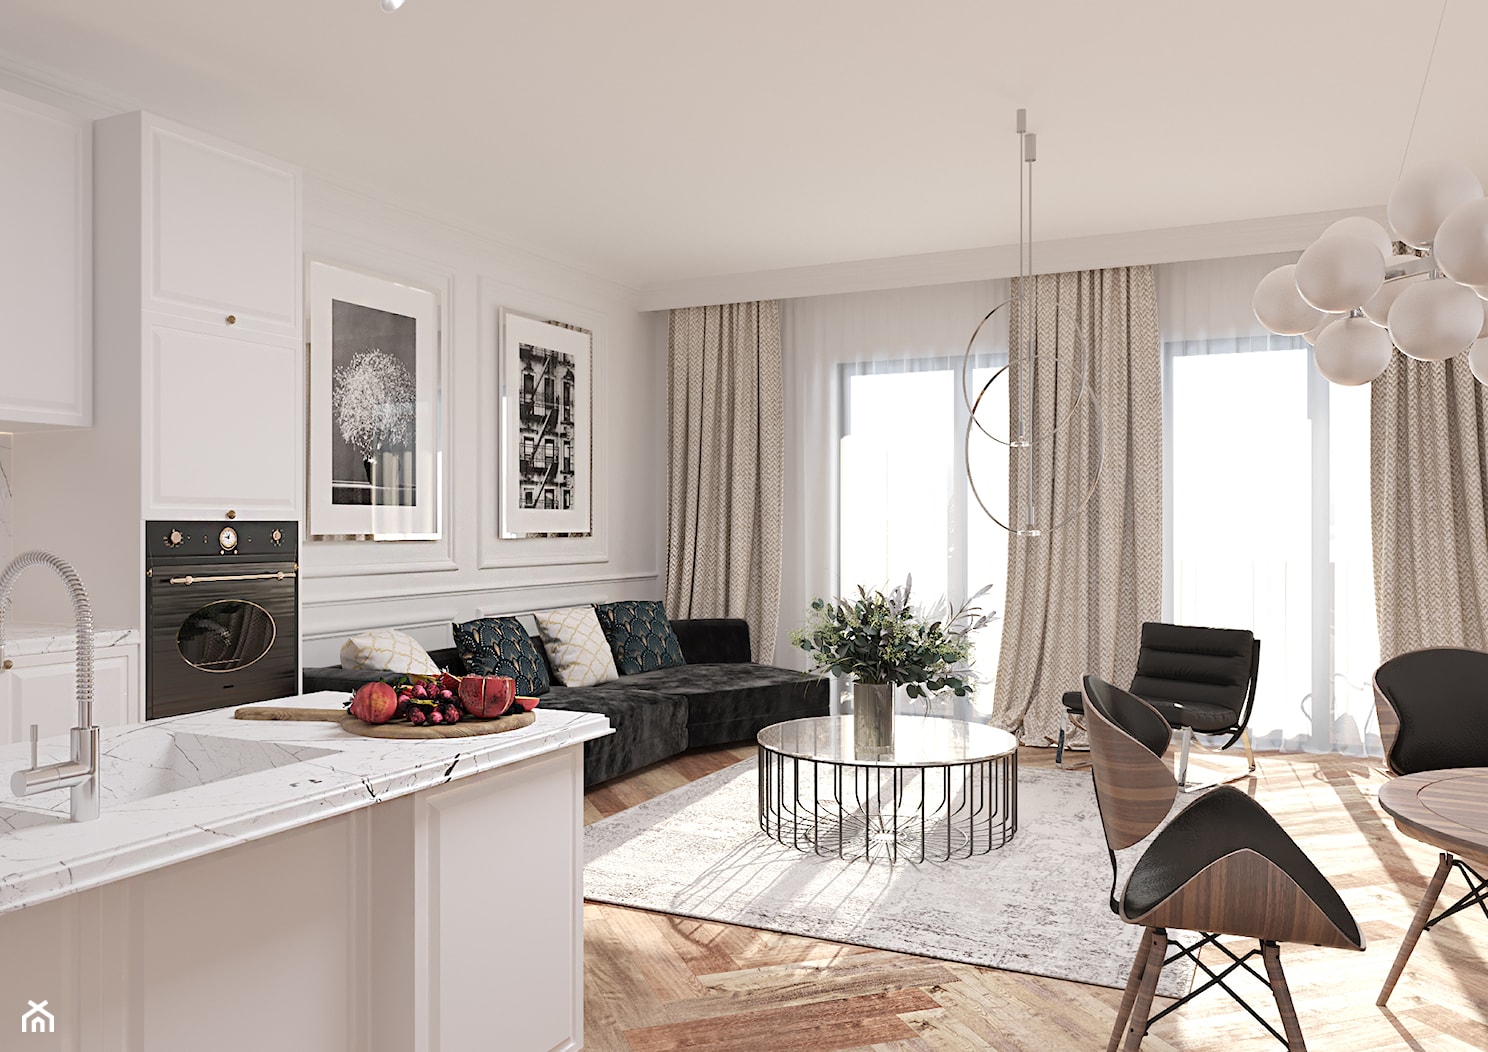 Paryski apartament - Salon, styl prowansalski - zdjęcie od Brand New House - Homebook